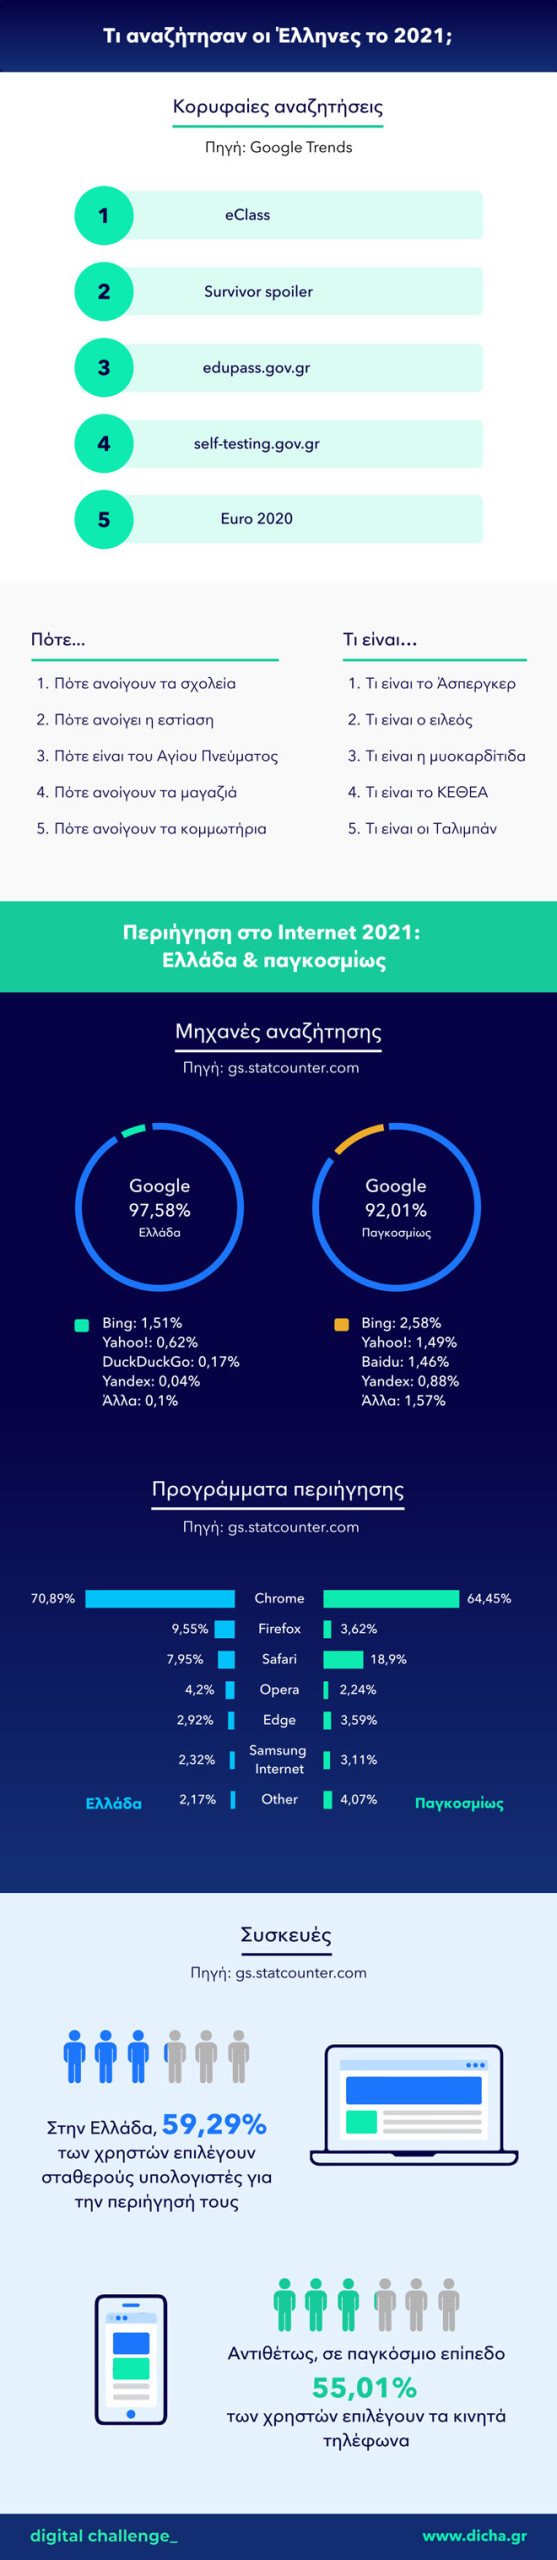 Infographic με στοιχεία για τις ελληνικές κορυφαίες αναζητήσεις και δεδομένα για τη χρήση internet στην Ελλάδα και παγκοσμίως το 2021.